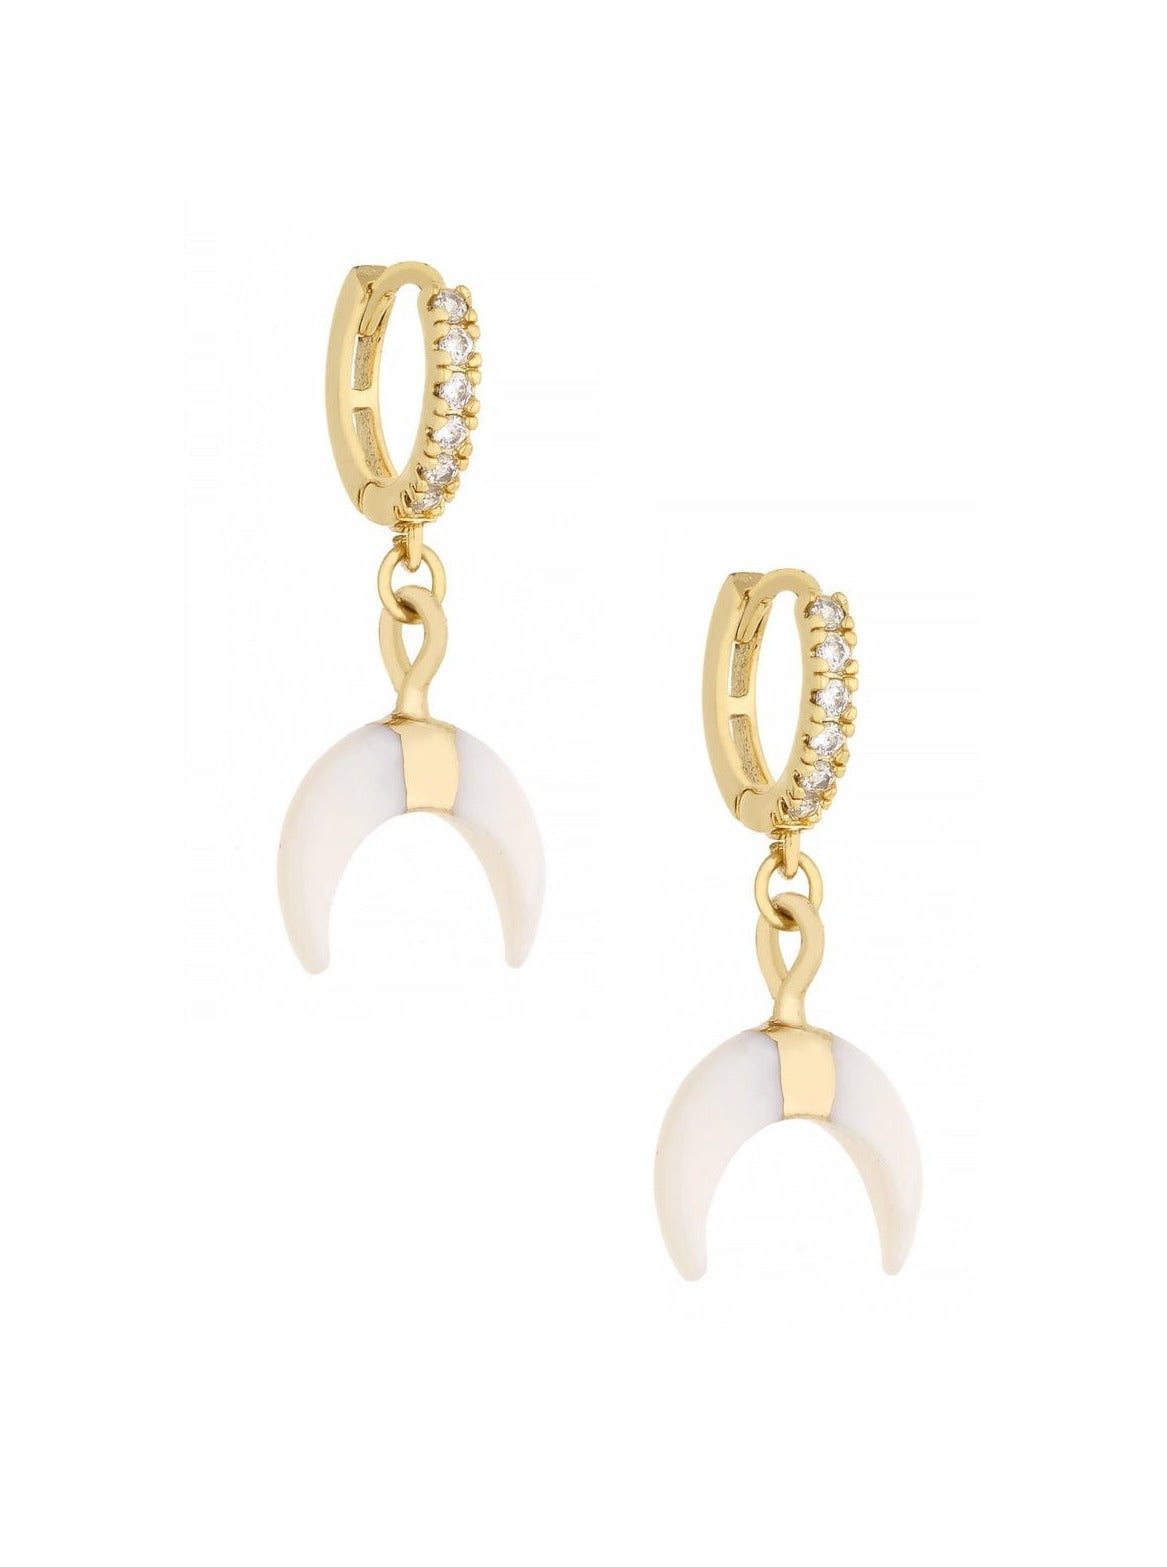 ettika earrings 18k GOLD PLATED BOHO WHITE CRESCENT // DANGLE EARRINGS